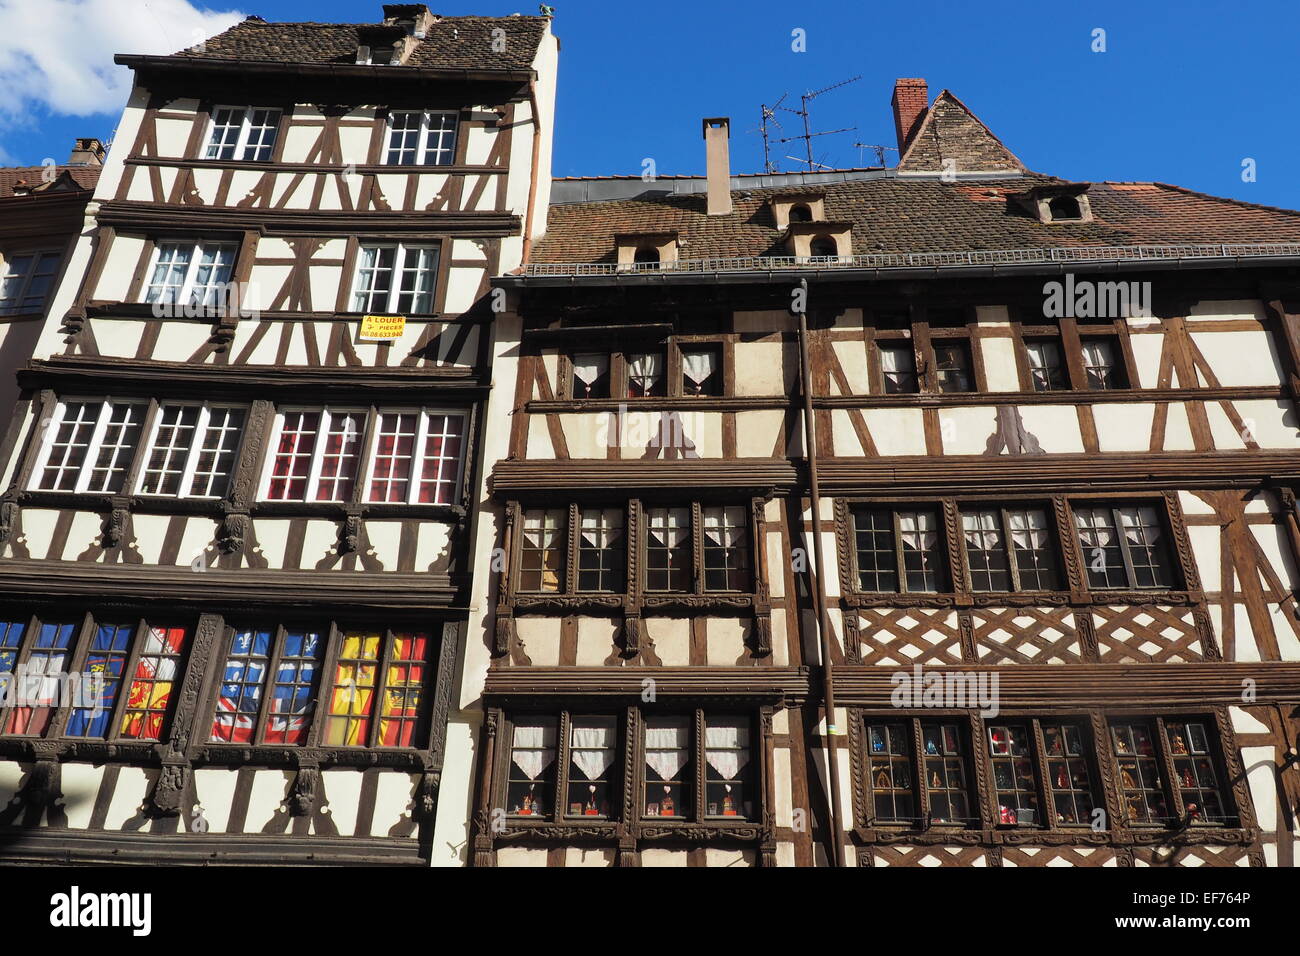 Ornate, medieval timber framed civil housing buildings, Strasbourg France. Stock Photo